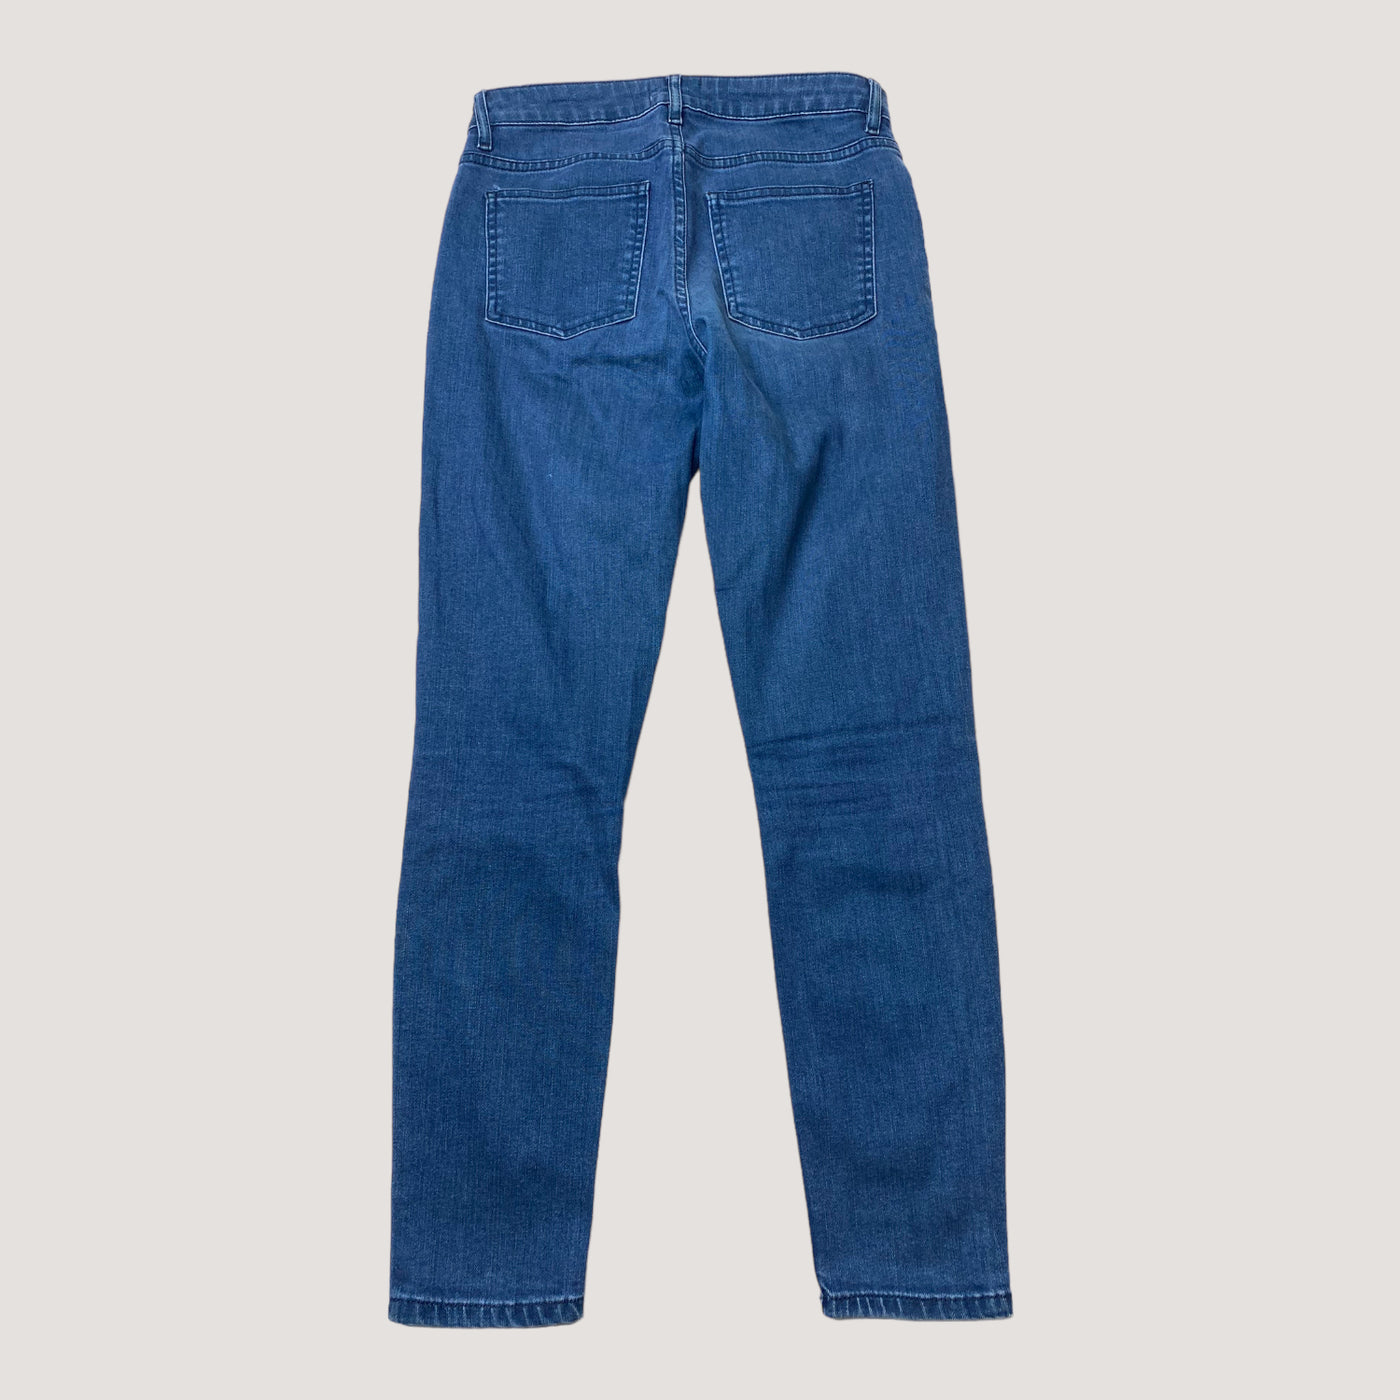 Acne studios skin 5 emerald jeans, blue | women 26/32